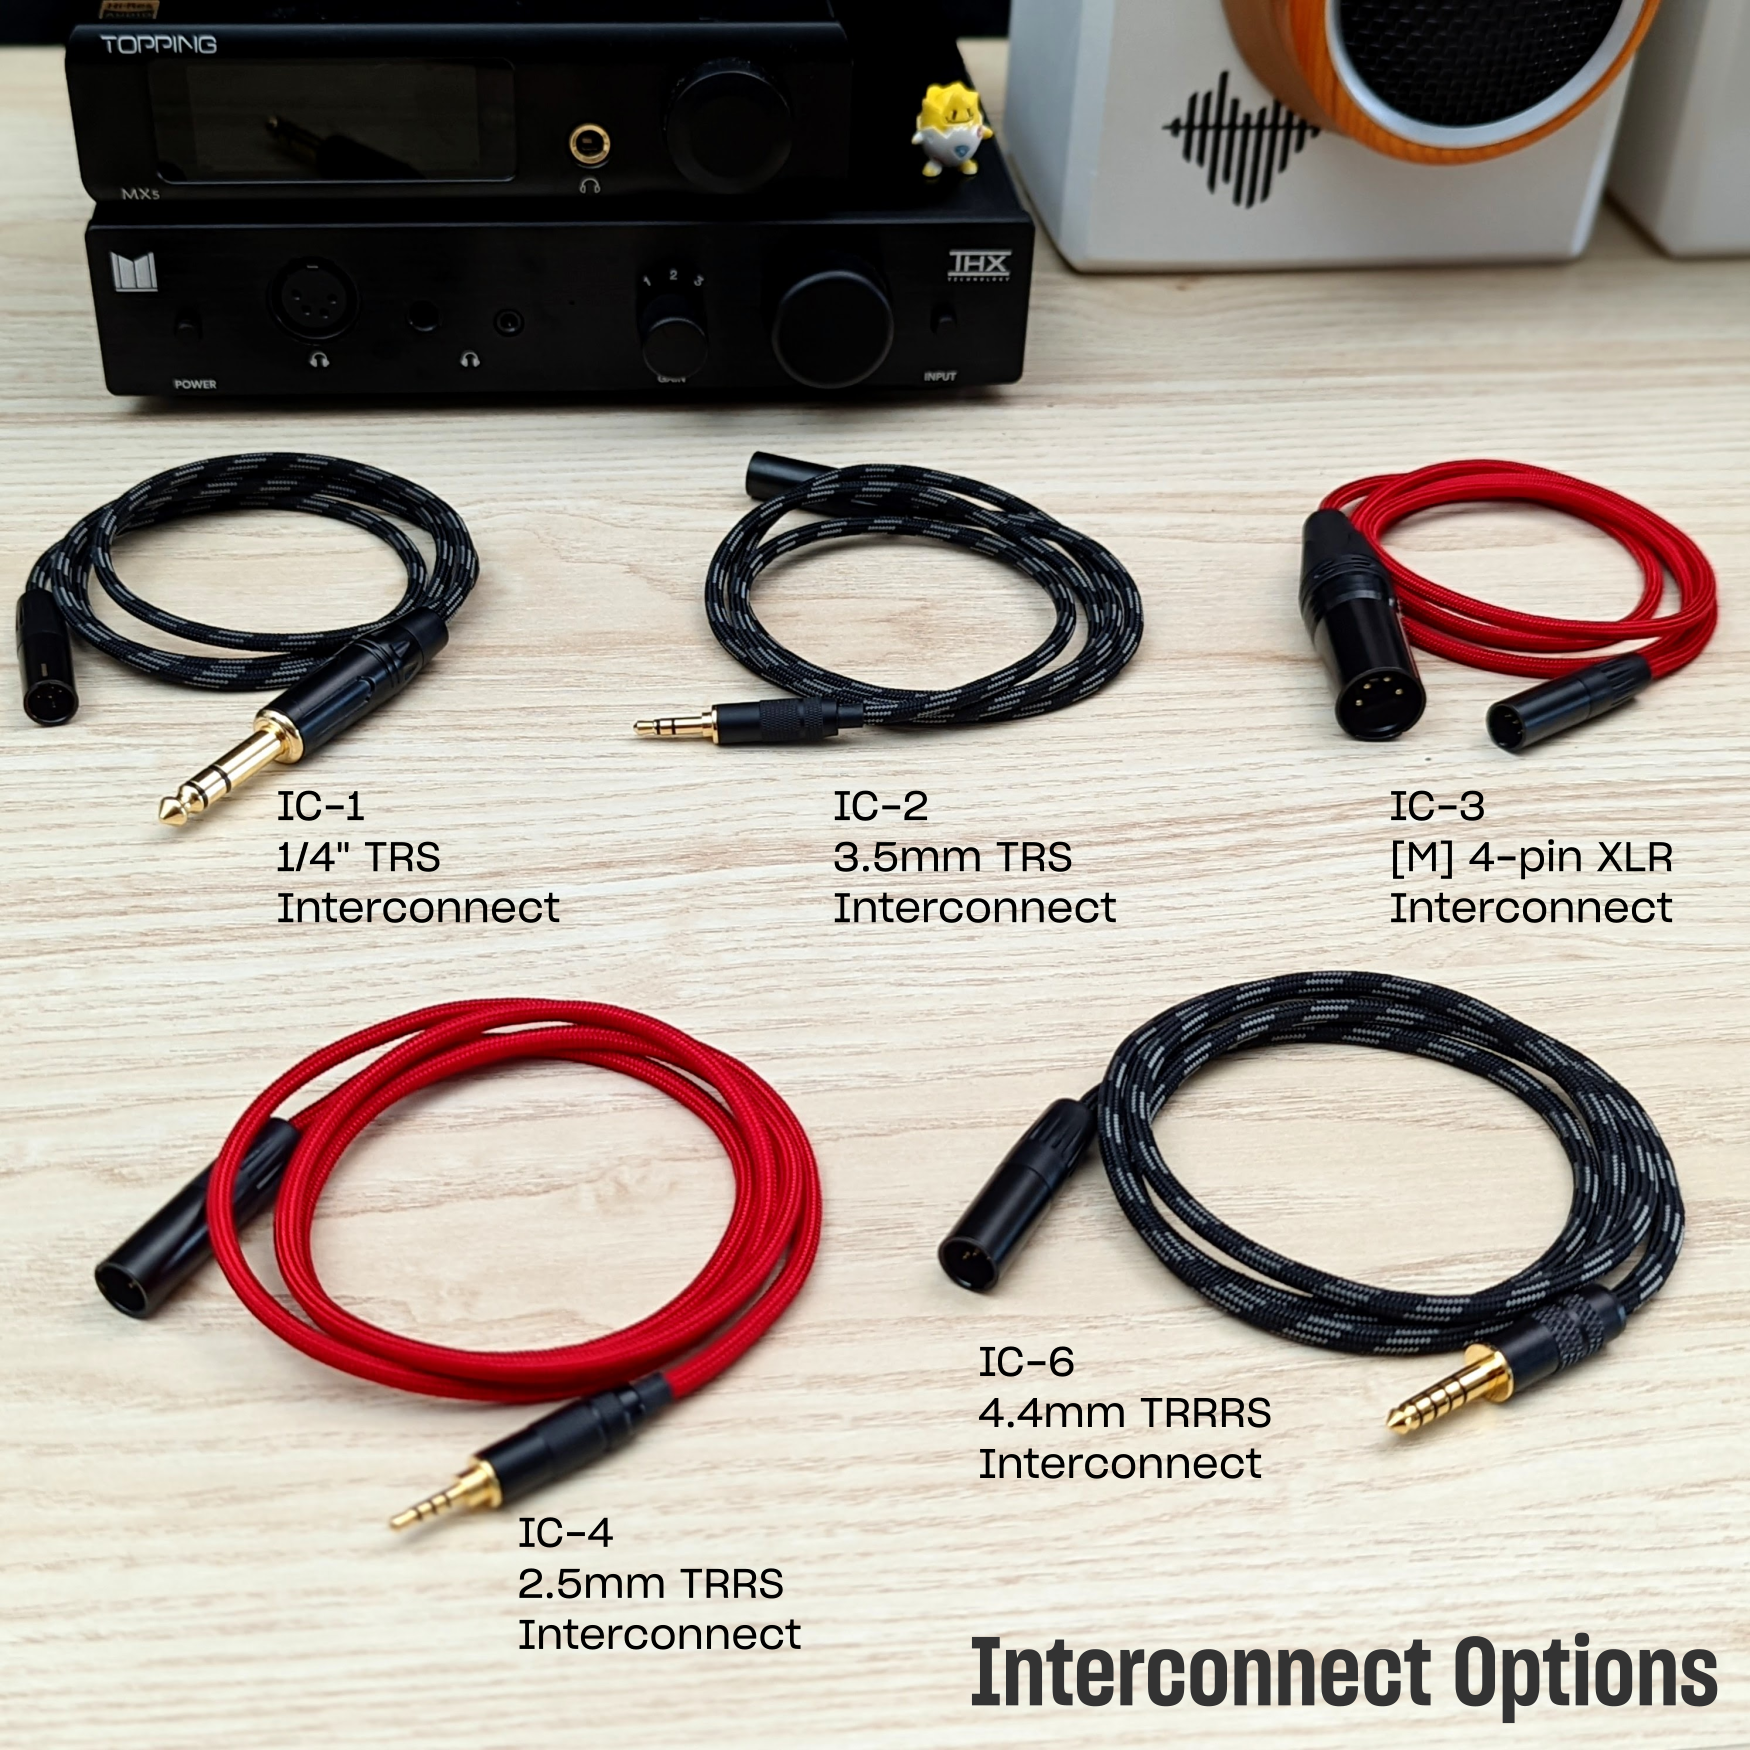 HC-10-Split: Dual [F] 4-pin mini-XLR split headphone cable for Audeze / ZMF / Meze headphones